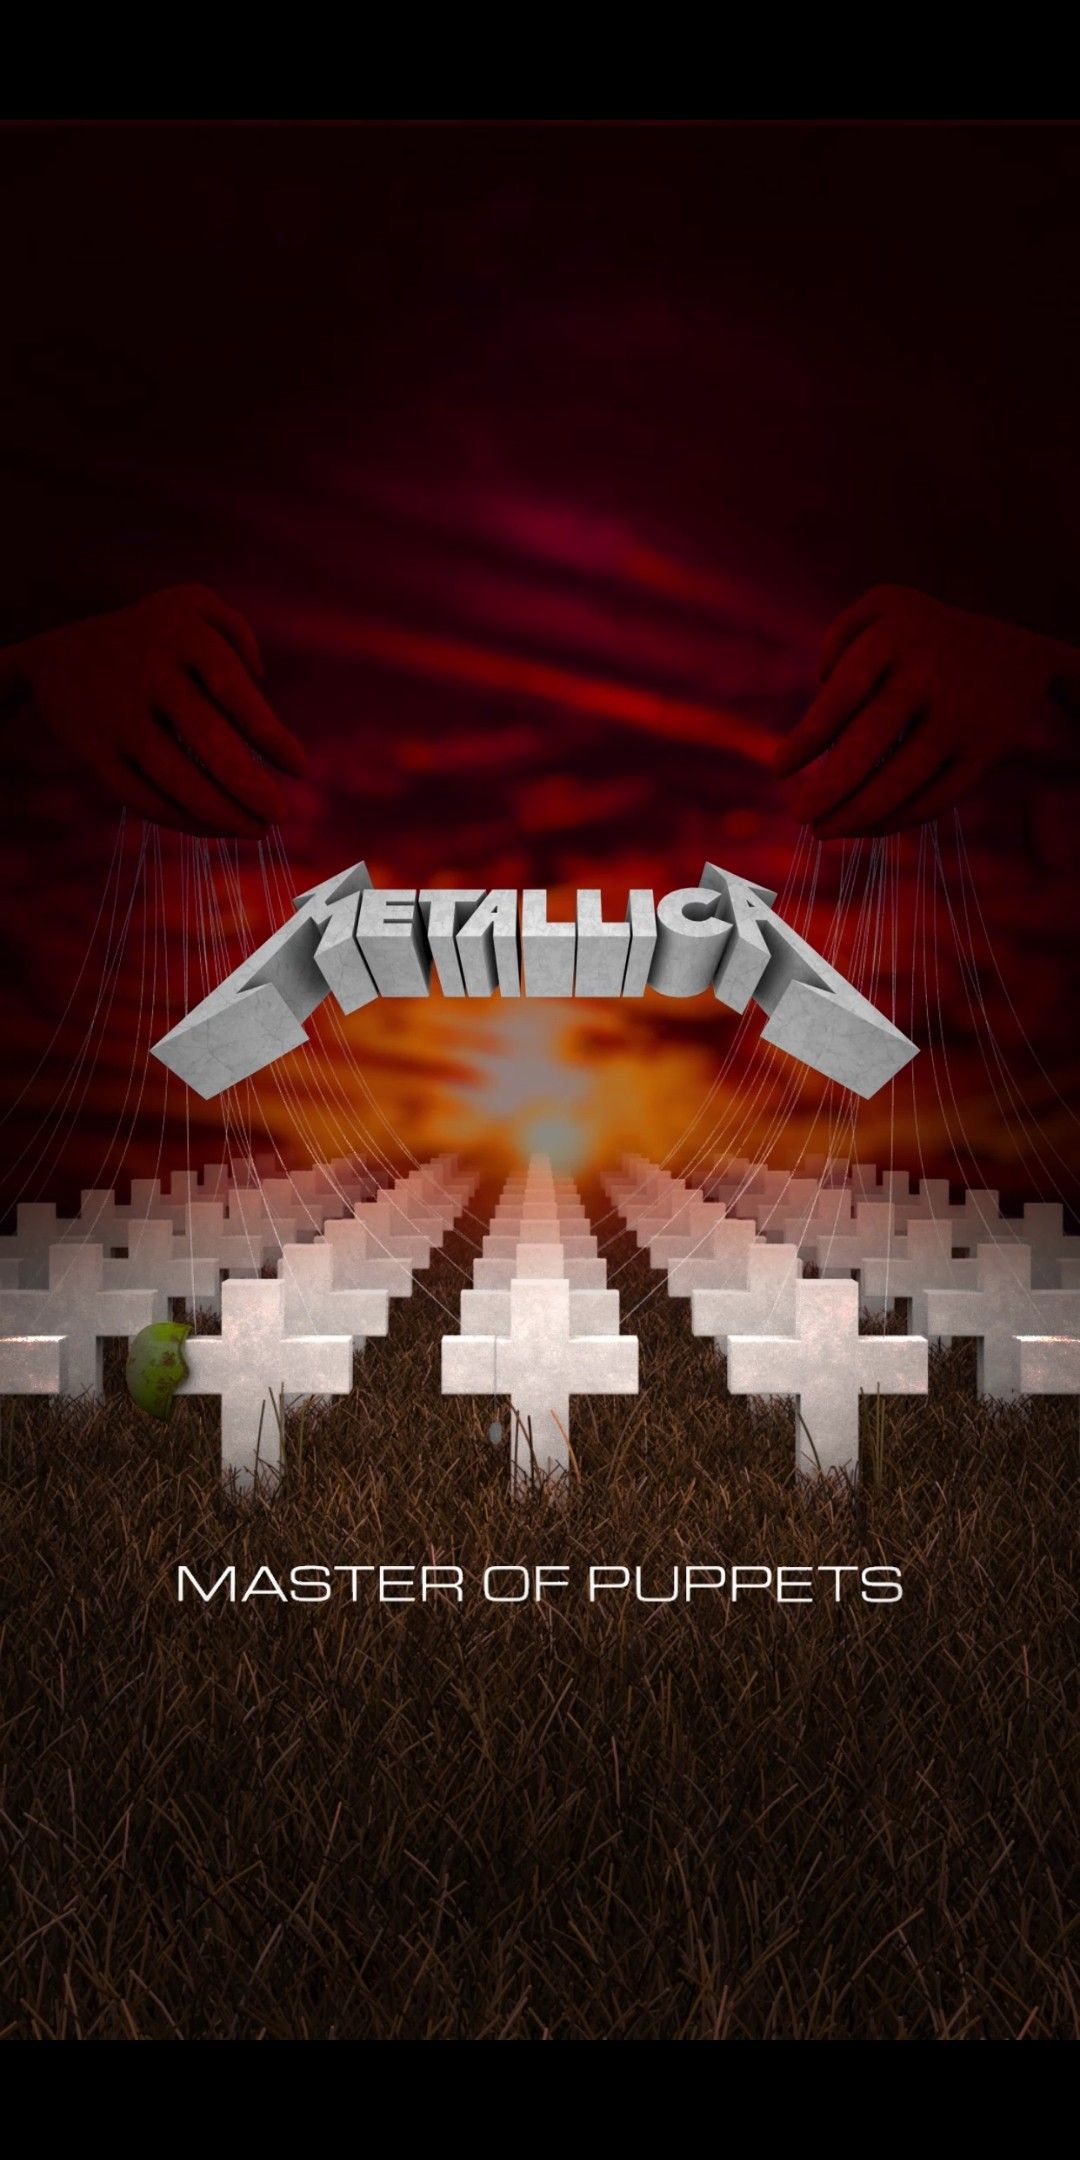 Metallica master of puppets wallpaper iPhone. Metallica album covers, Metallica albums, Metallica art